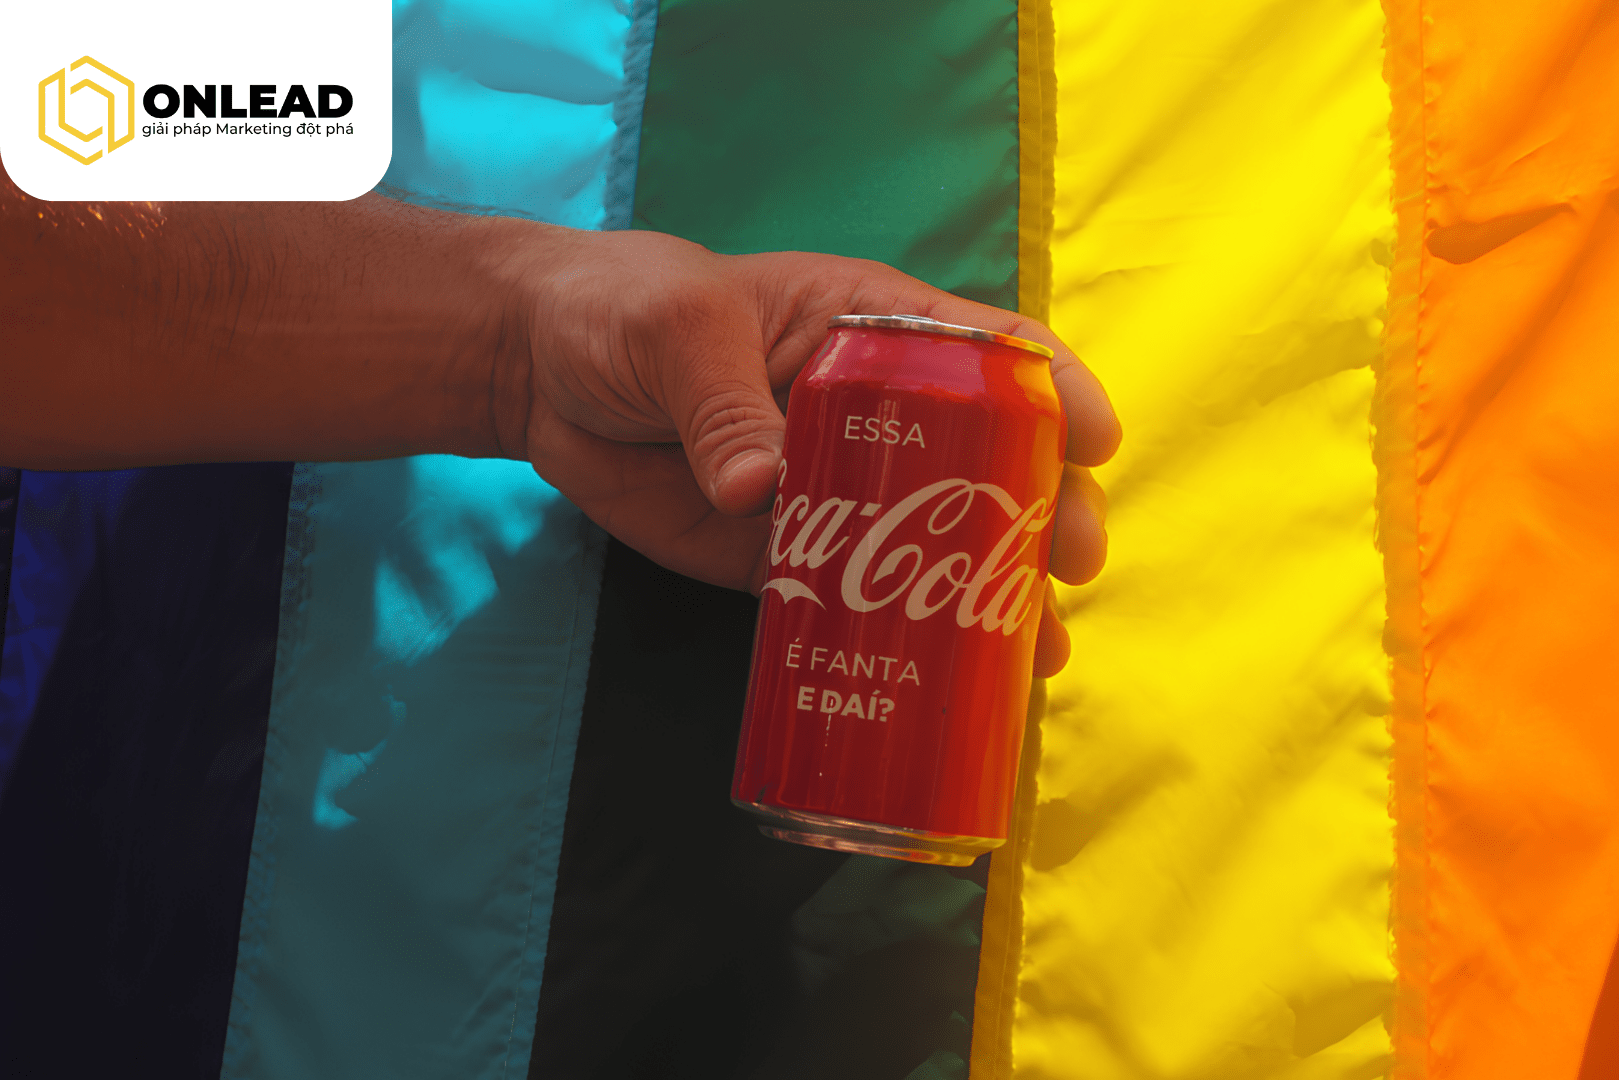 “This Coke is a Fanta, so what?”, chiến dịch truyền thông “thế kỷ” của Coca-Cola